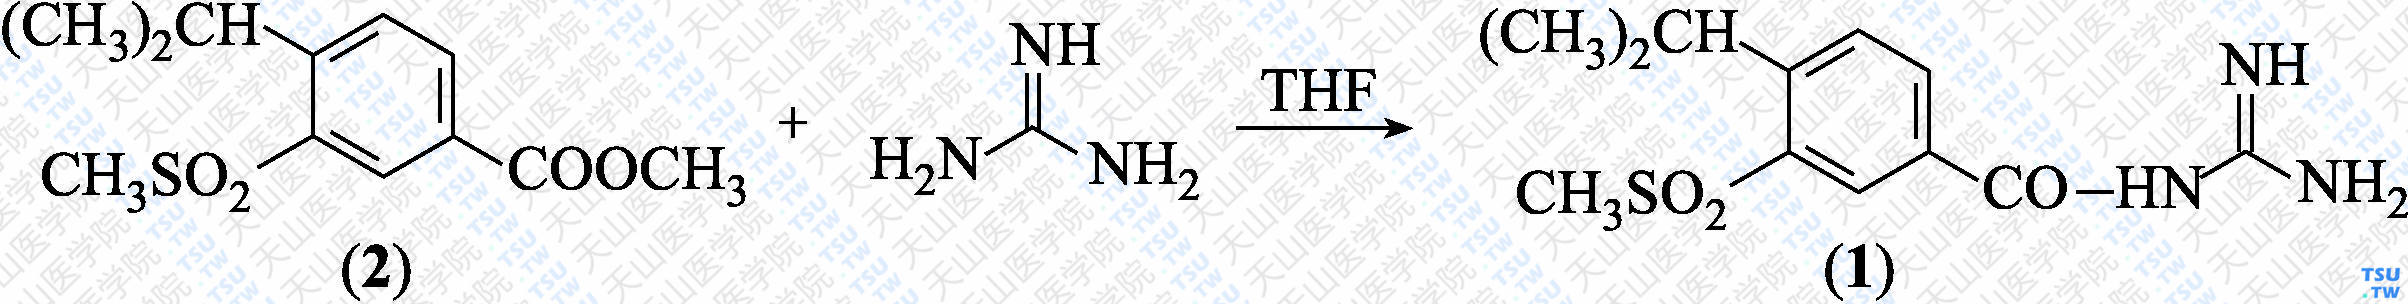 卡立帕米德（分子式：C<sub>12</sub>H<sub>17</sub>N<sub>3</sub>O<sub>3</sub>S）的合成方法路线及其结构式